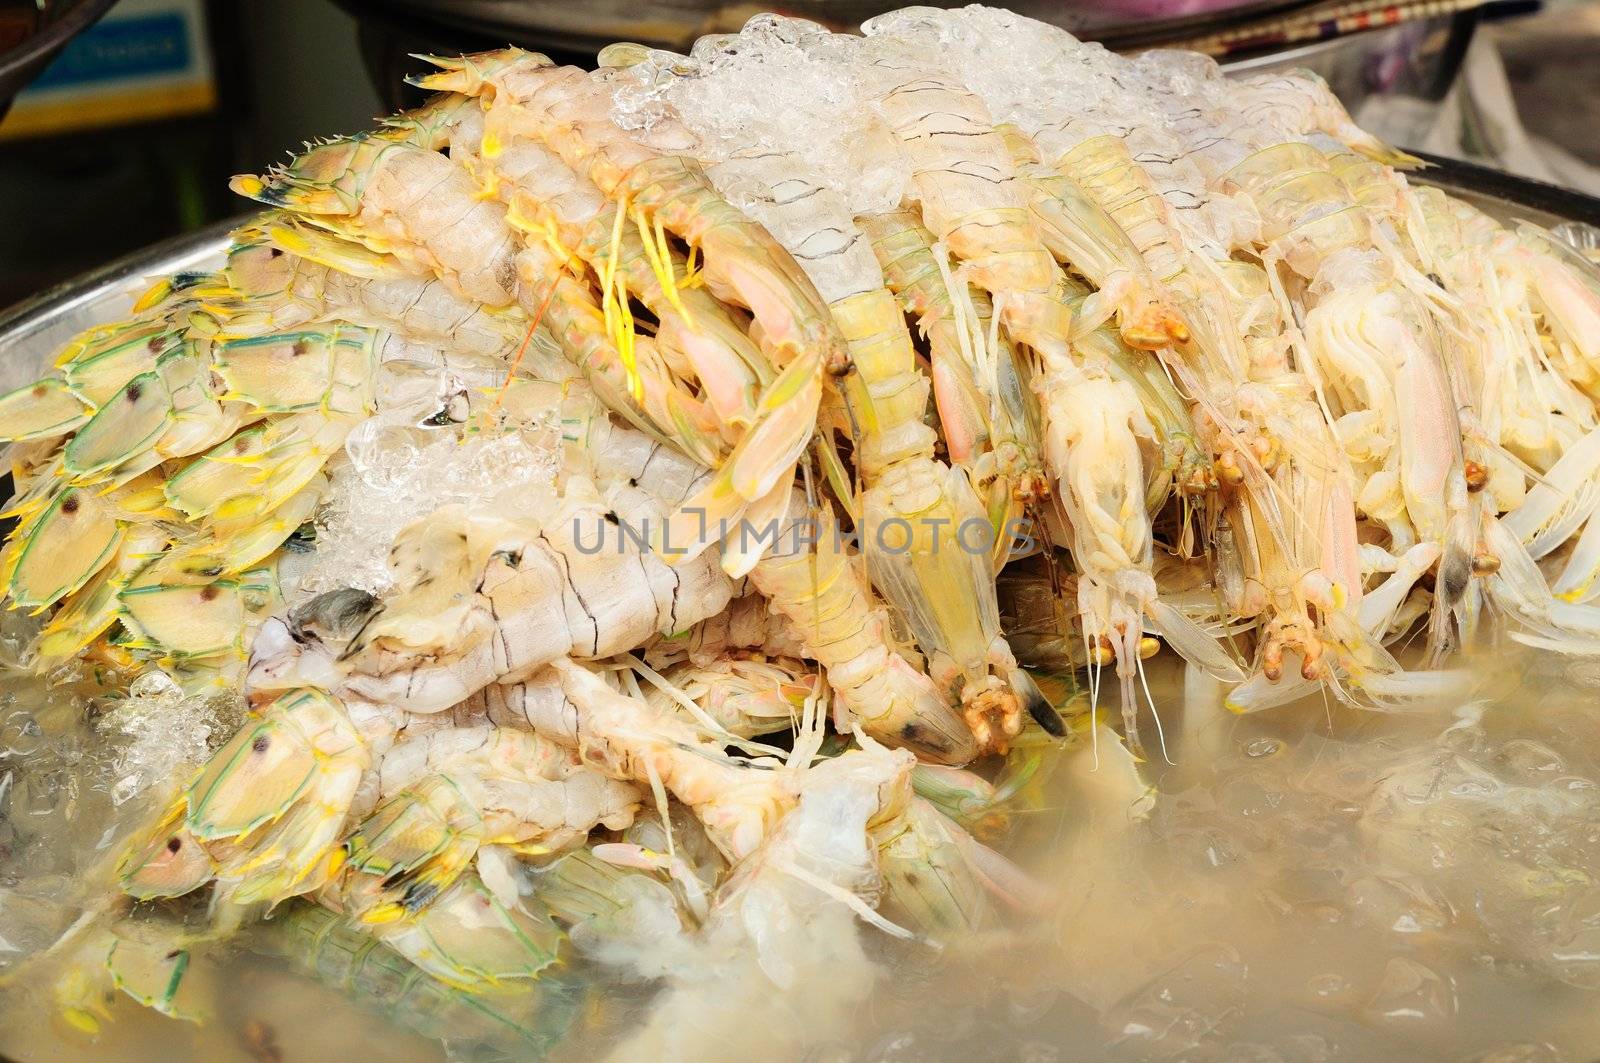 Mantis shrimp with ice in fresh market in Thailand 